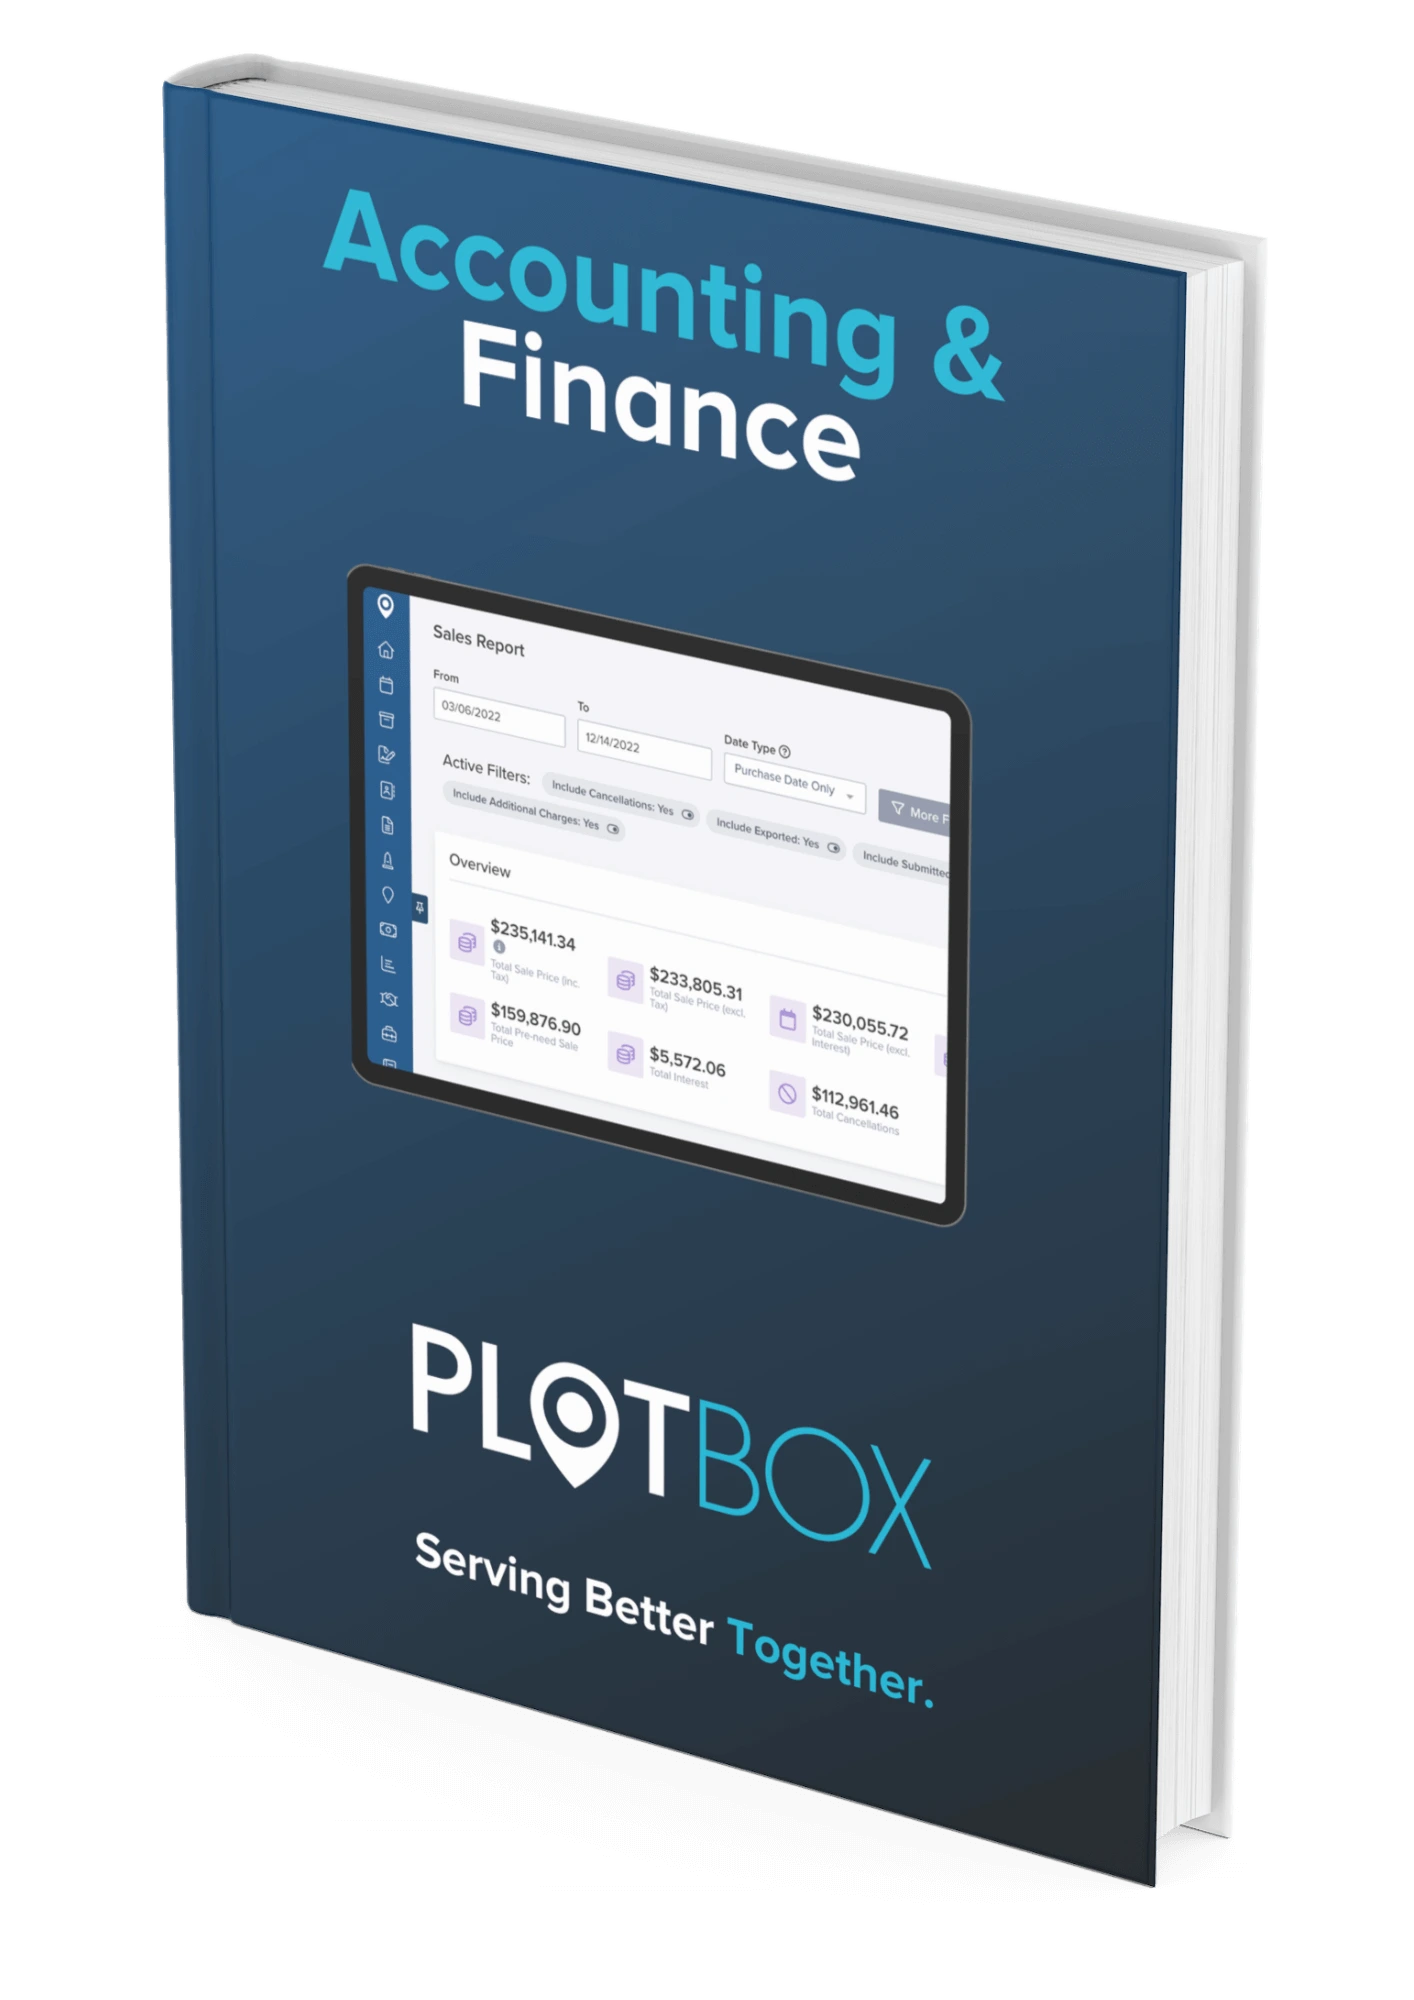 PlotBox - Finance Download 